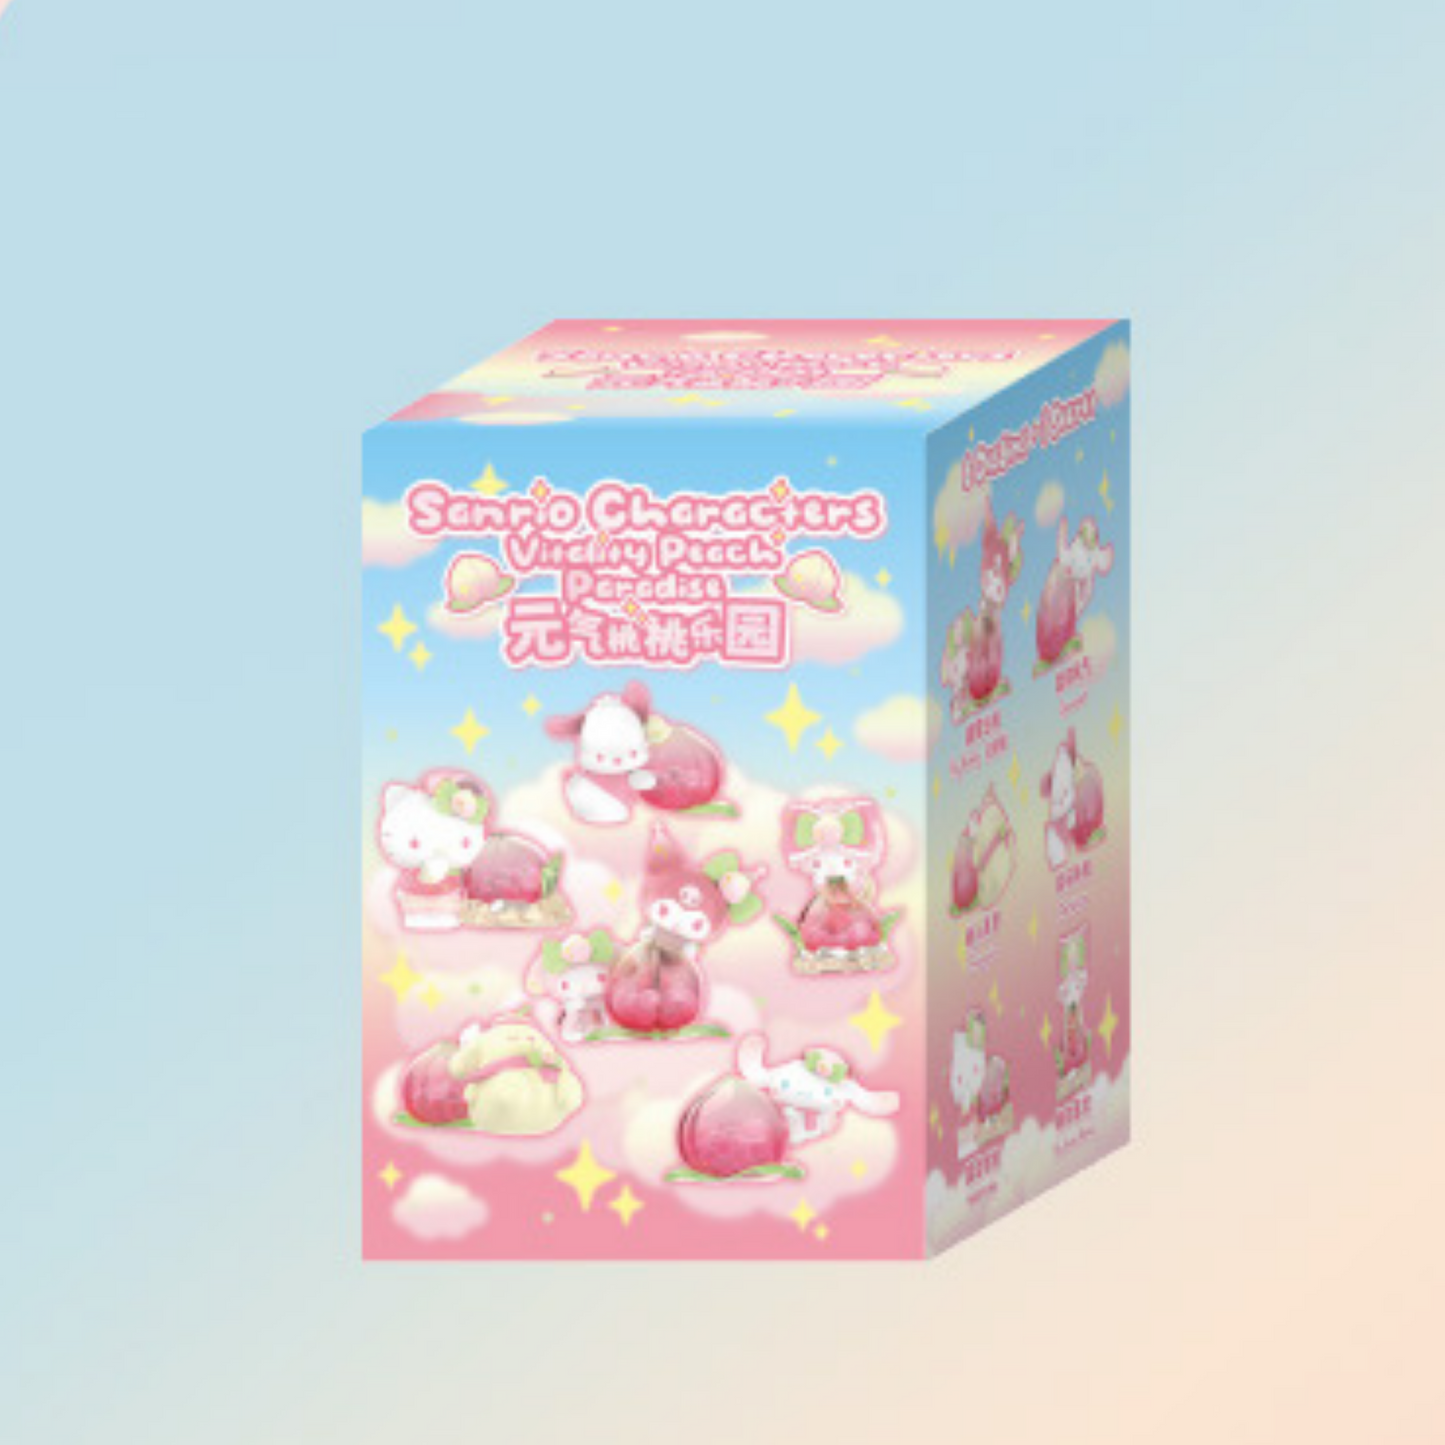 【NEW】Top Toy Sanrio Characters: Vitality Peach Paradise Series Blind Box Random Style